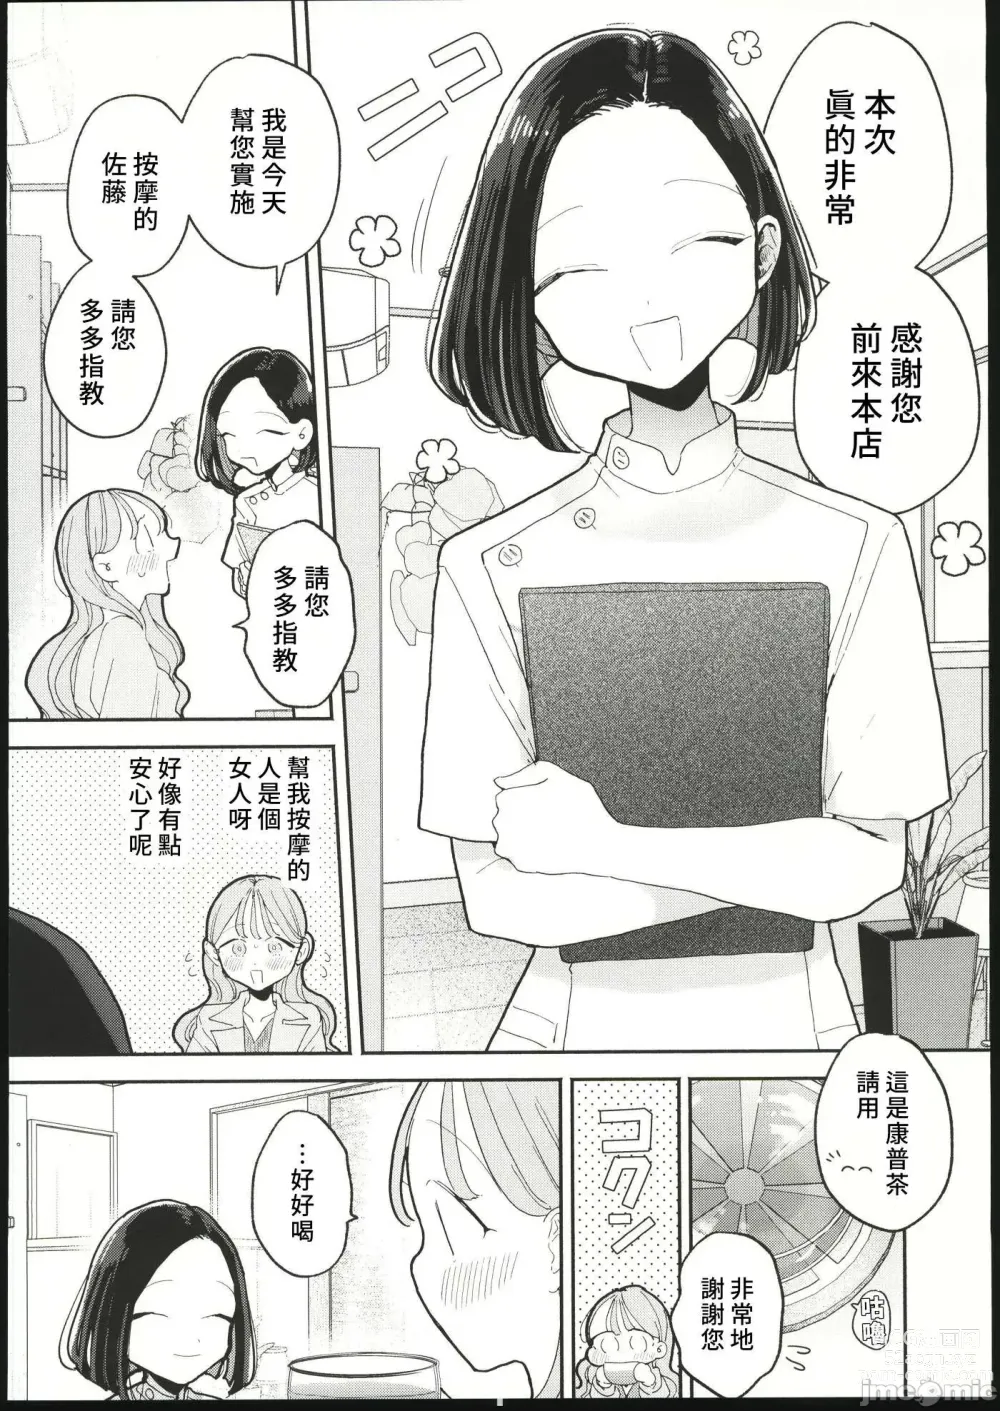 Page 4 of manga 絶頂リフレ 駅前の性感マッサージ店で○○になっちゃ